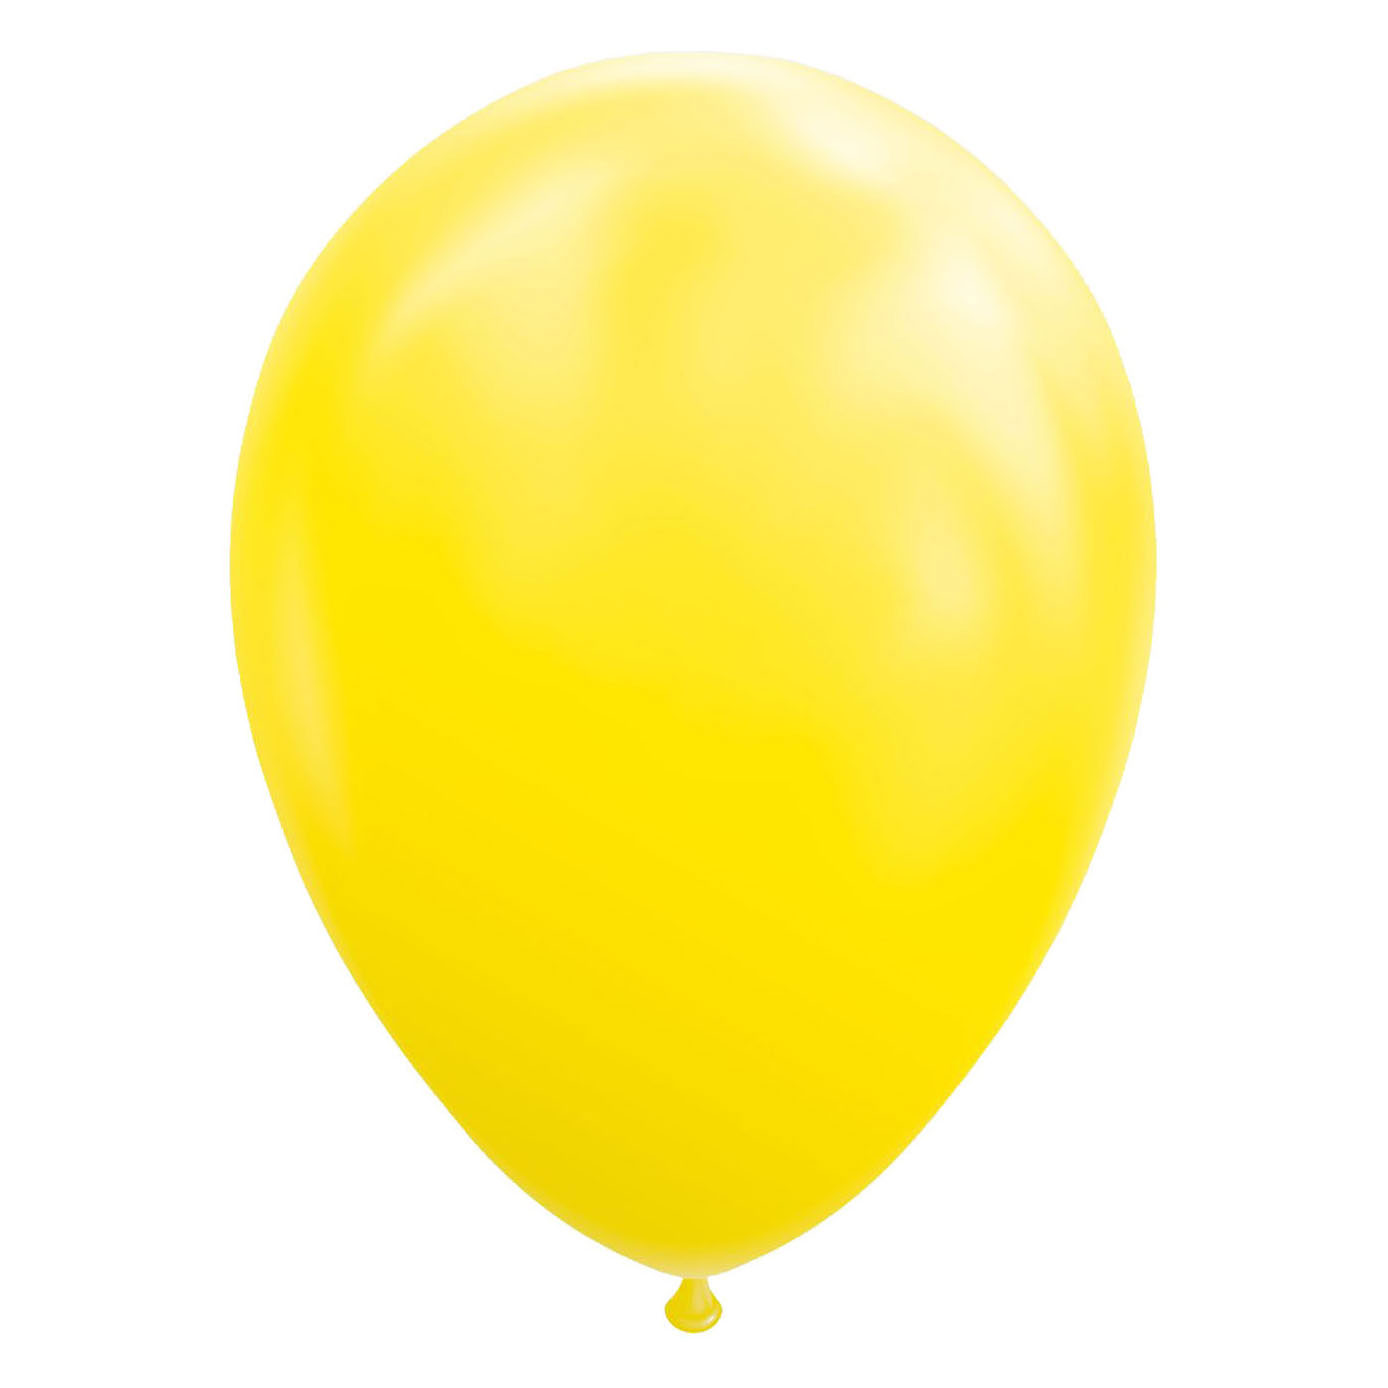 Ballons Jaunes 30cm, 10 pcs.